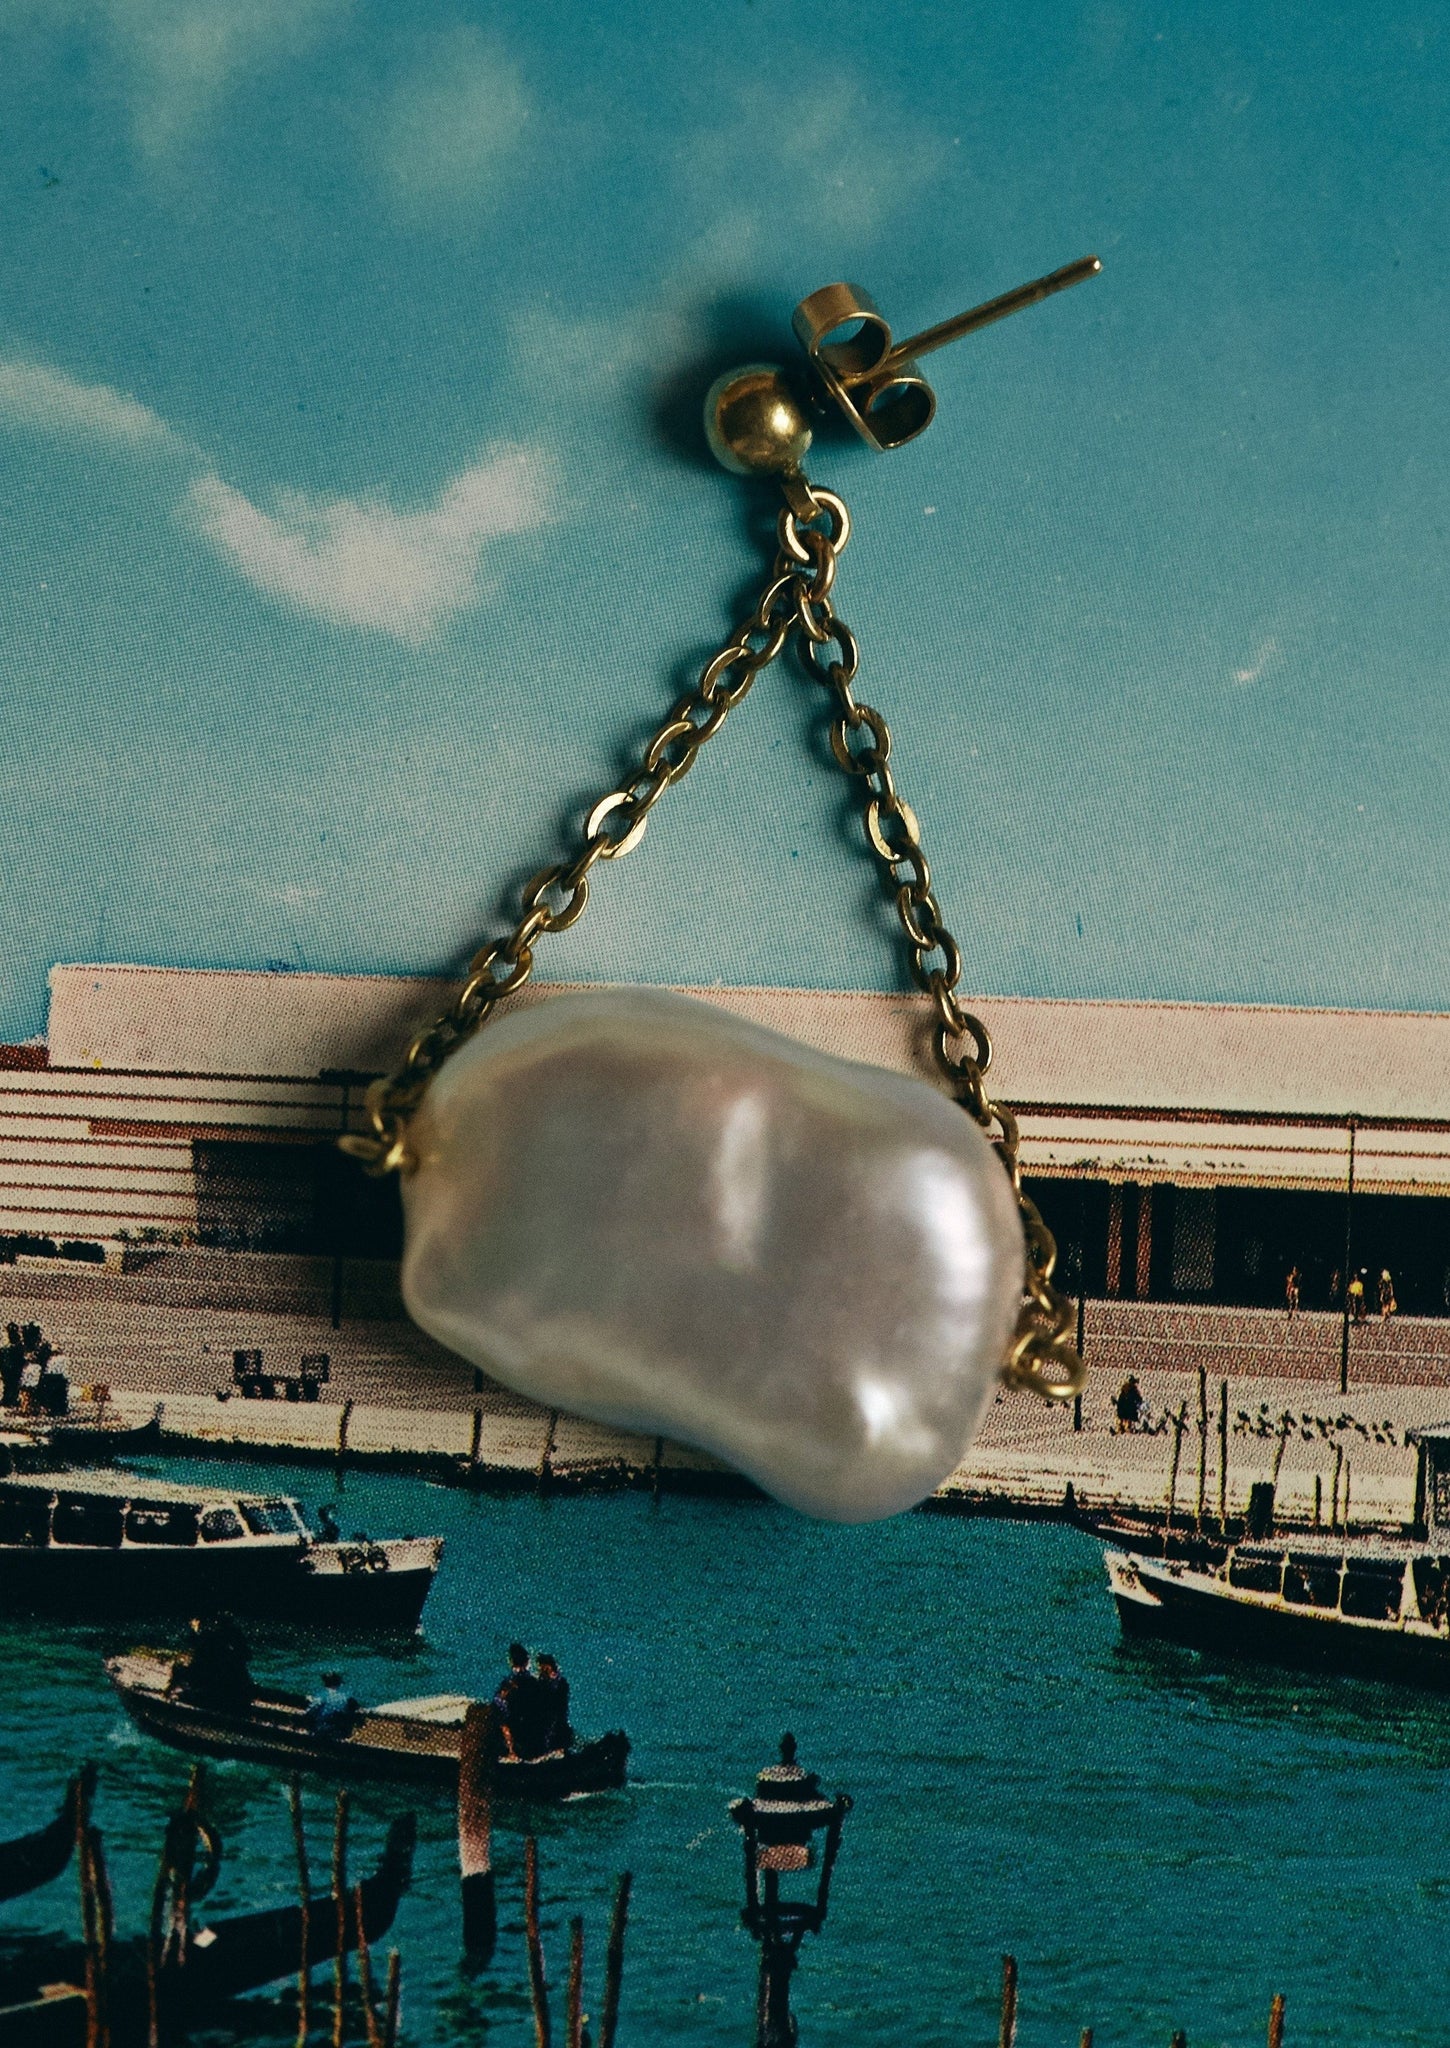 The Venezia earrings